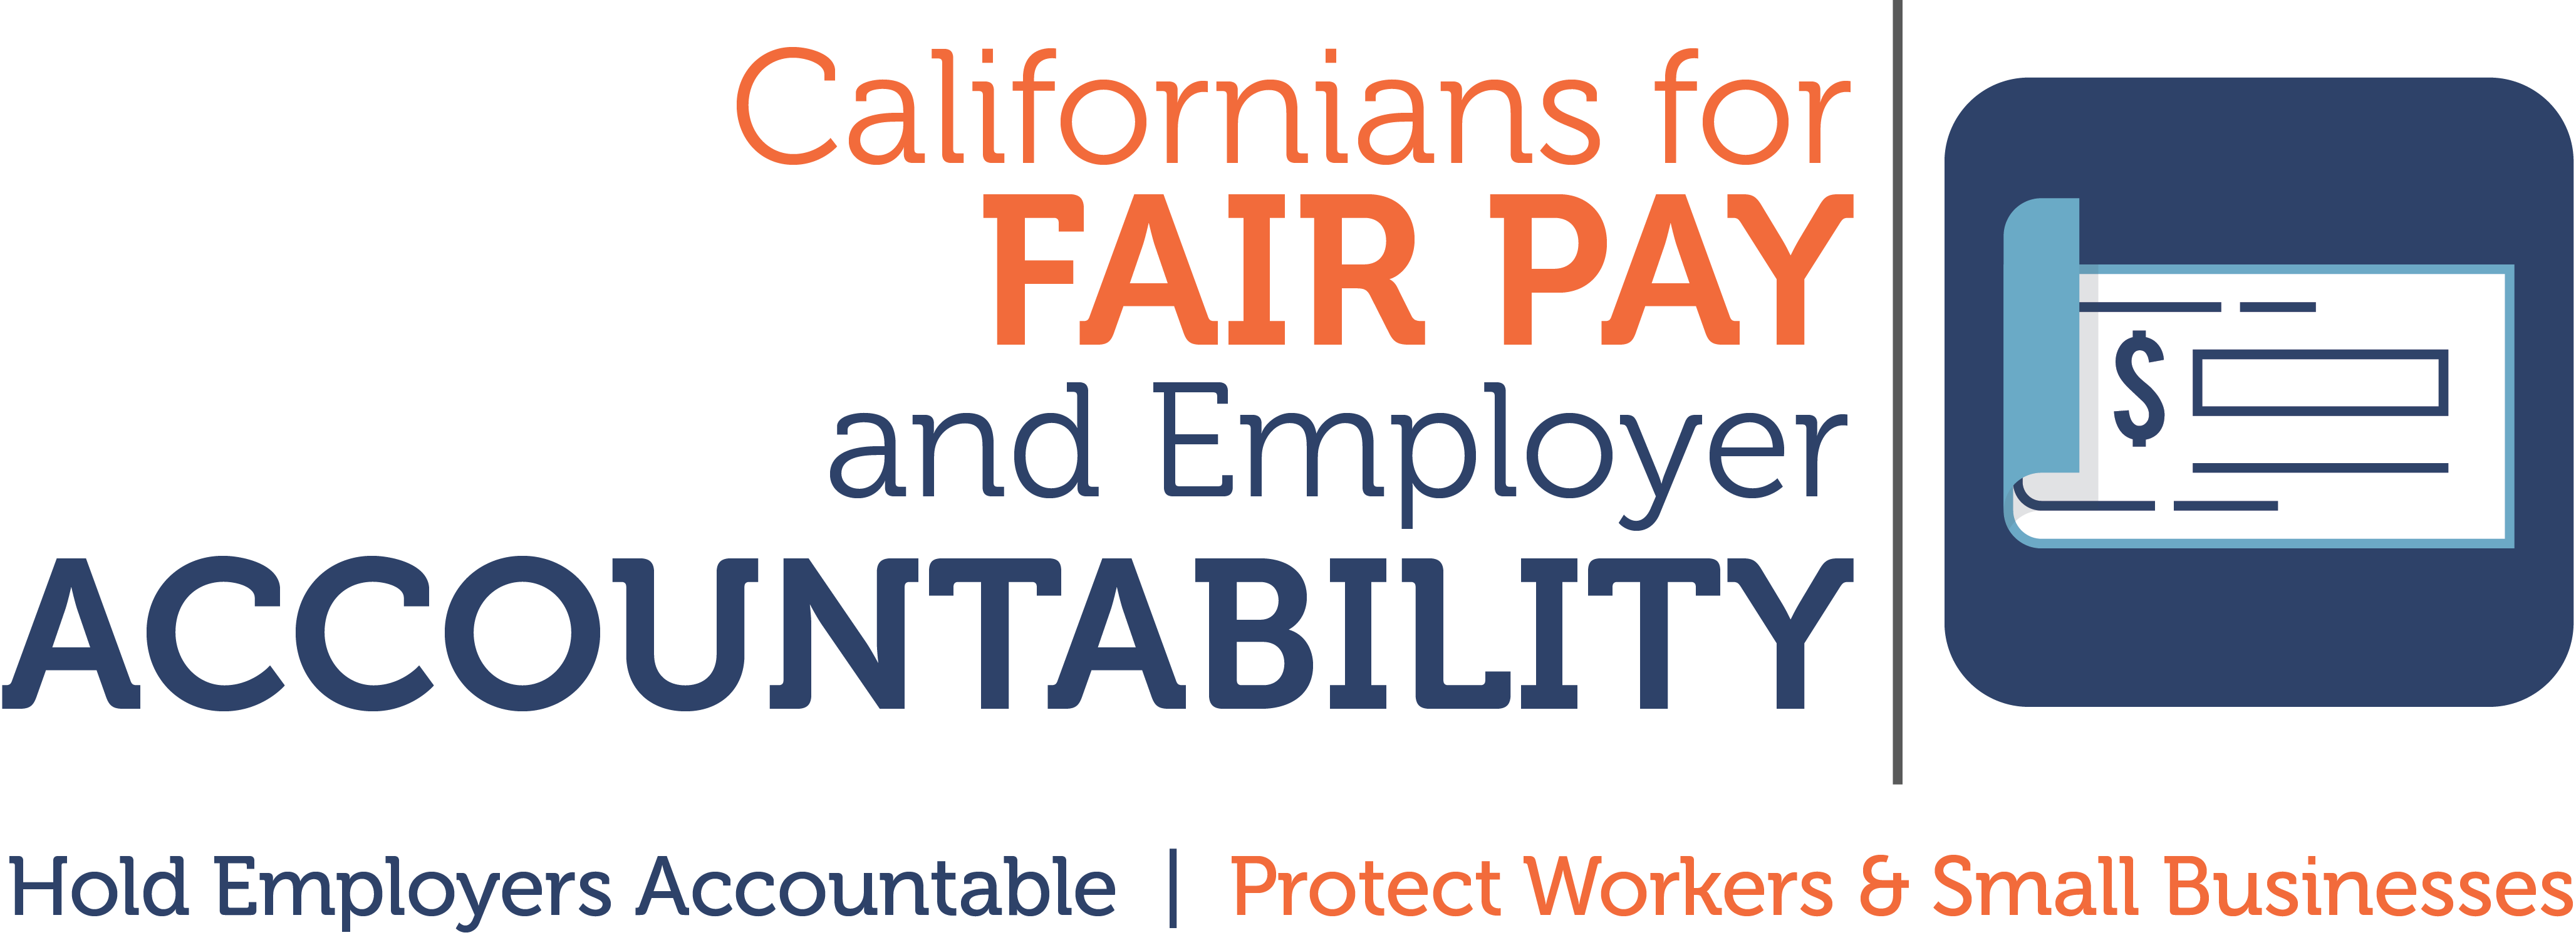 Californians for Fair Pay and Employer Accountability